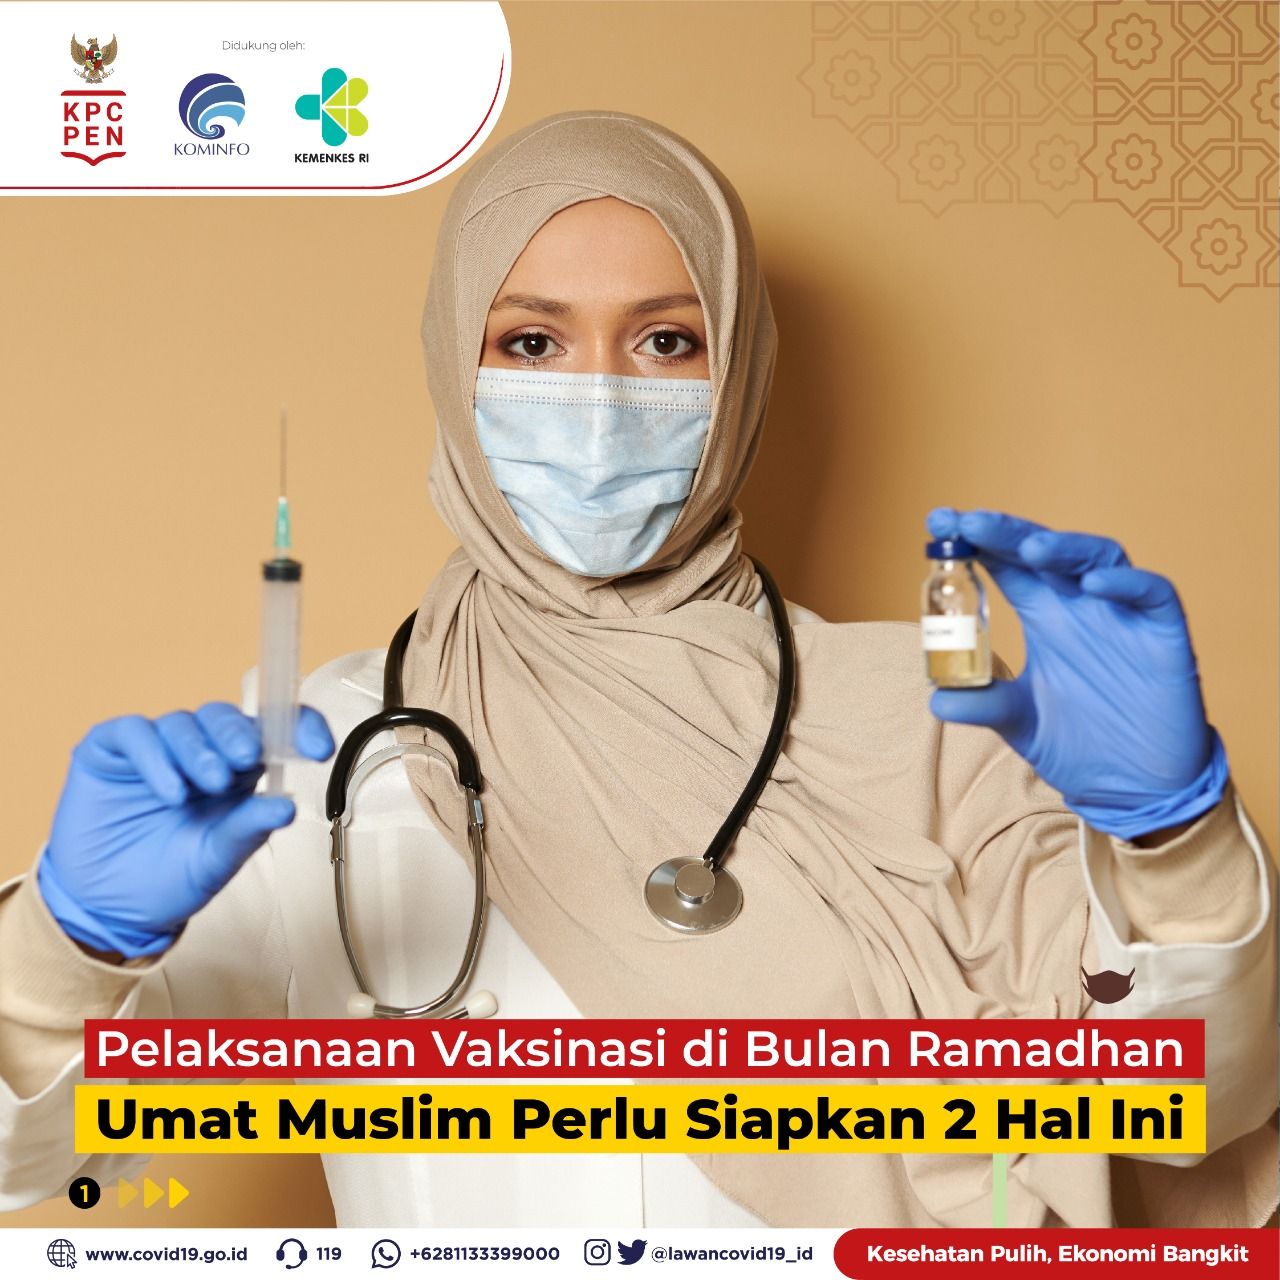 Pemerintah tetap lanjutkan program vaksinasi Covid-19 pada bulan Ramadhan